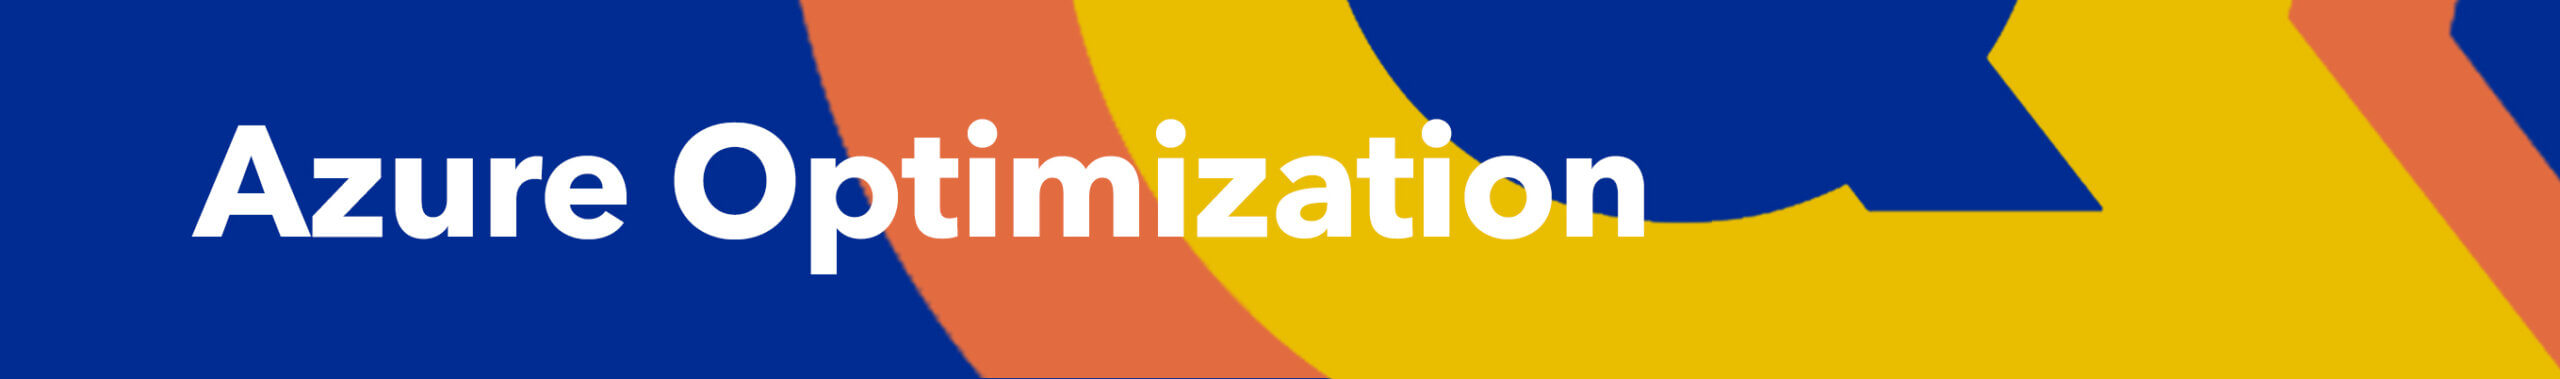 Azure Optimization by LicenseQ